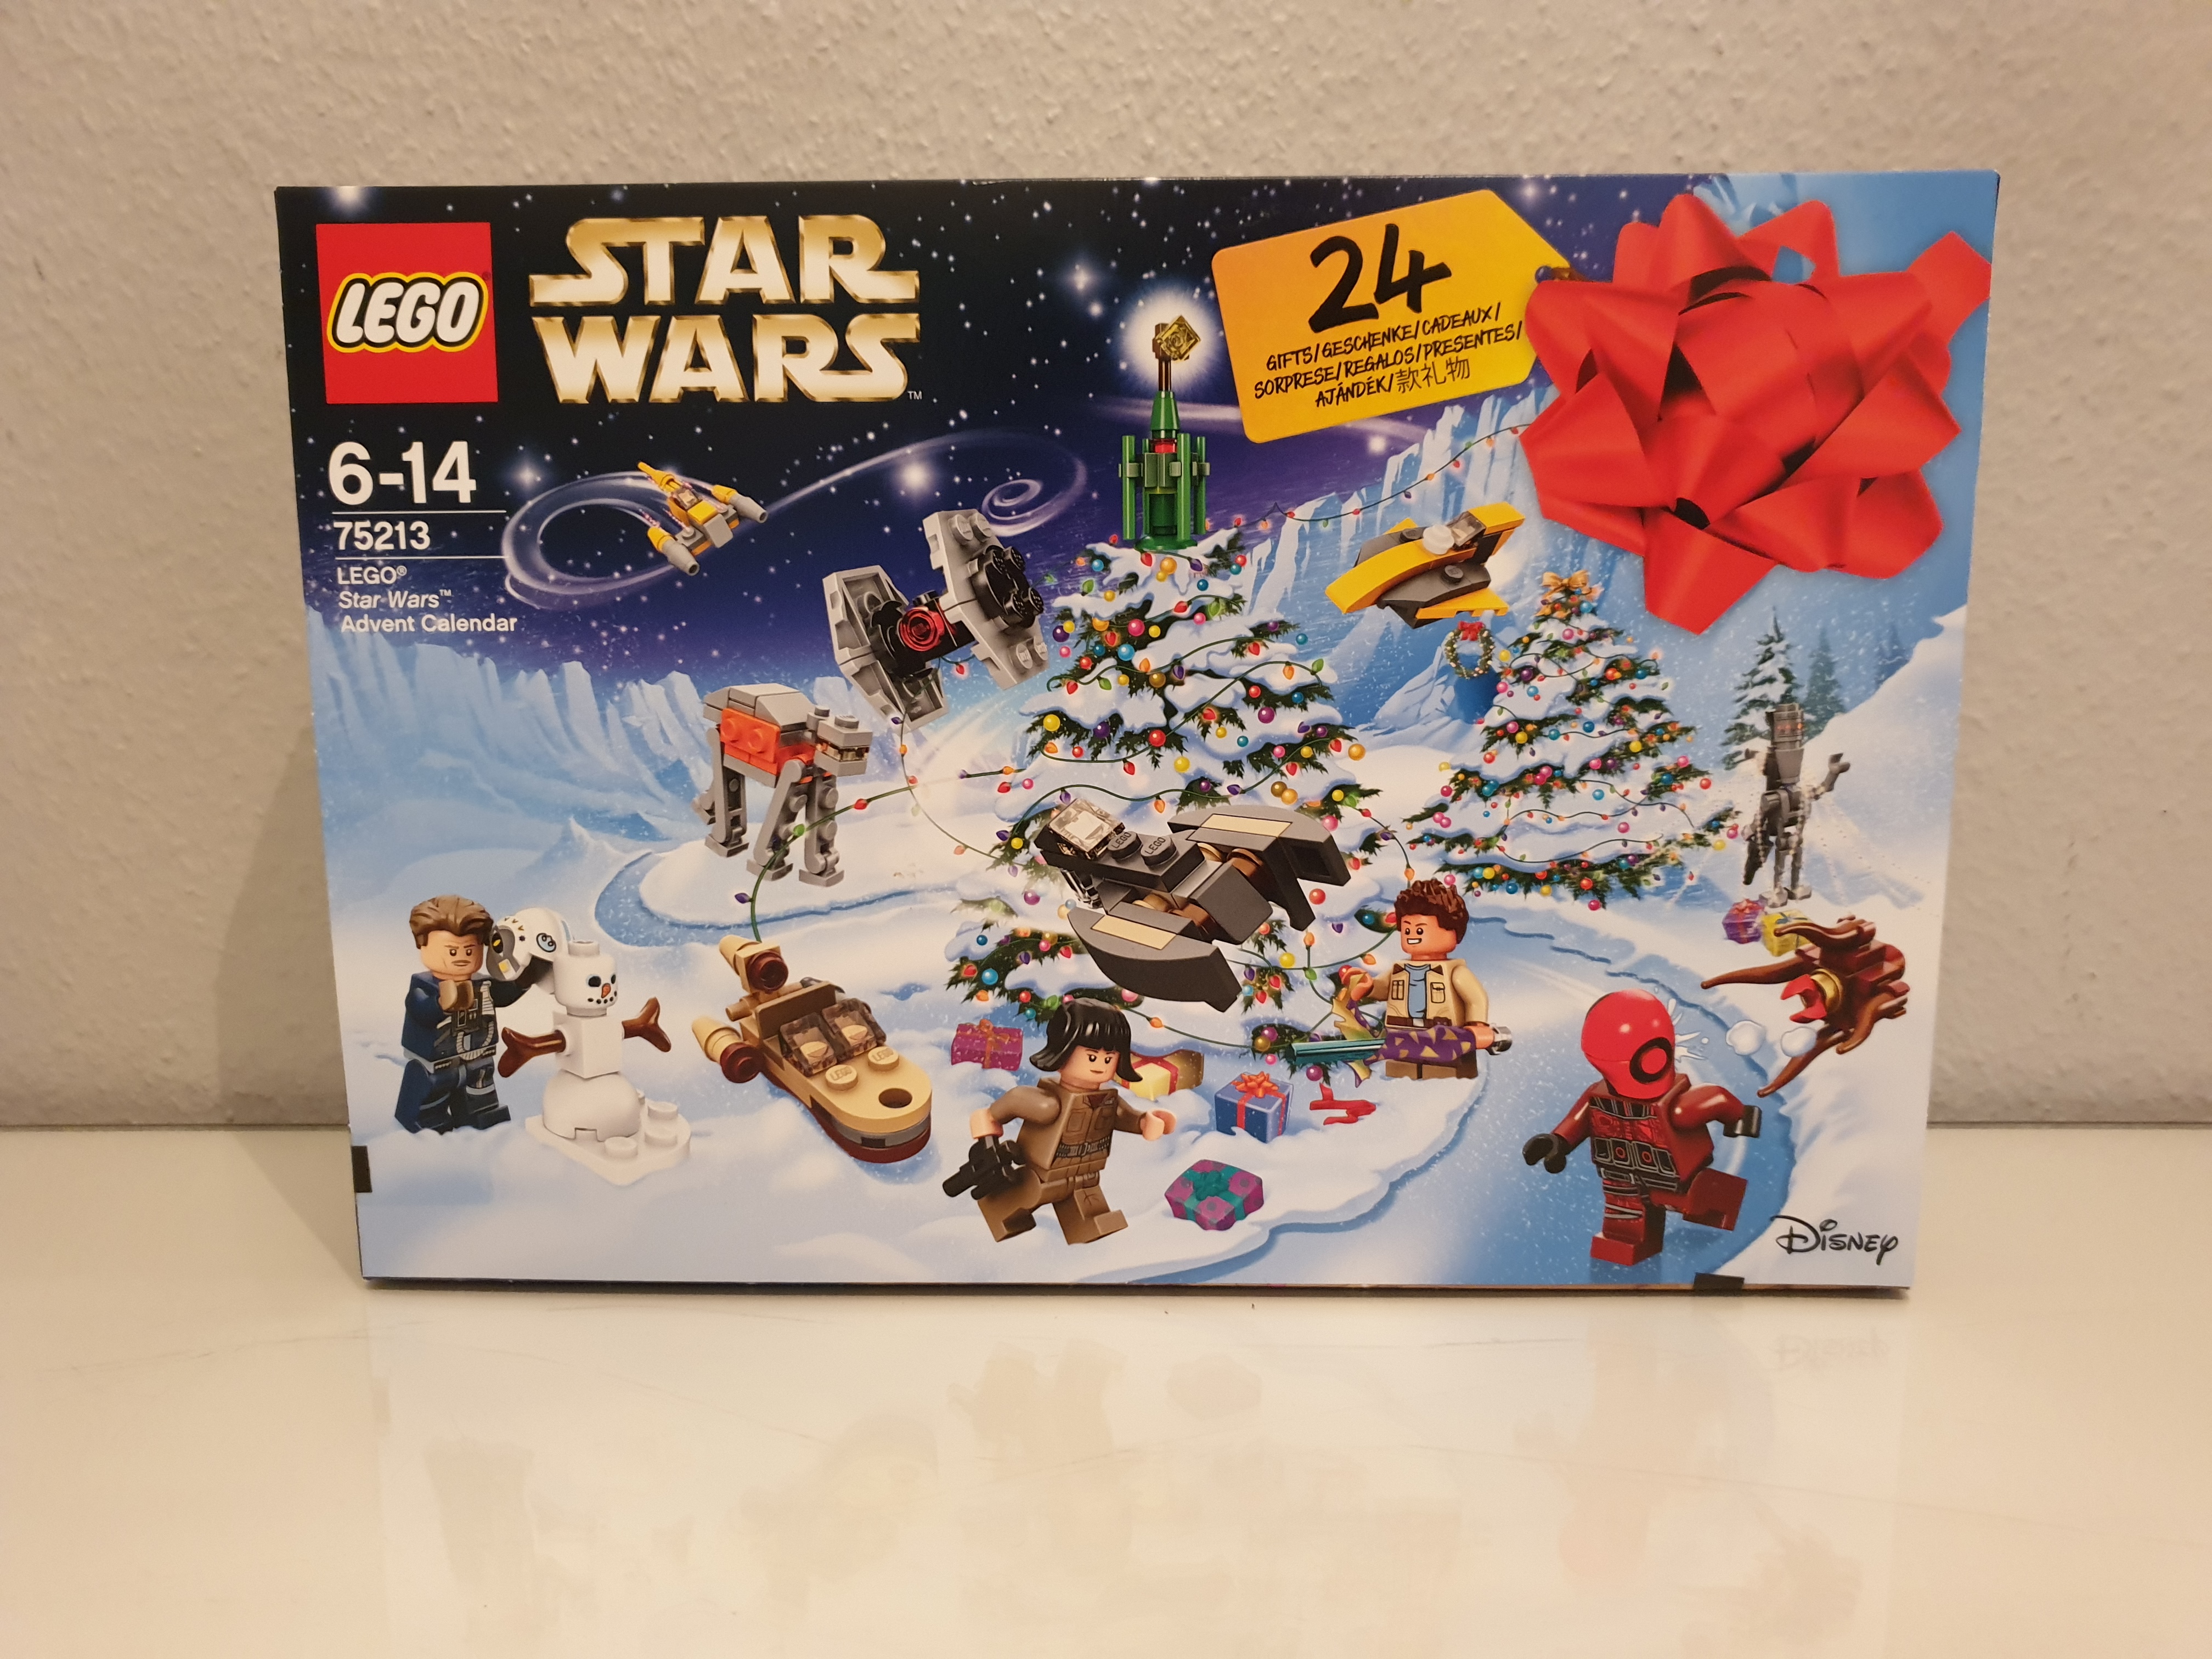 LEGO Star Wars Adventskalender 75213